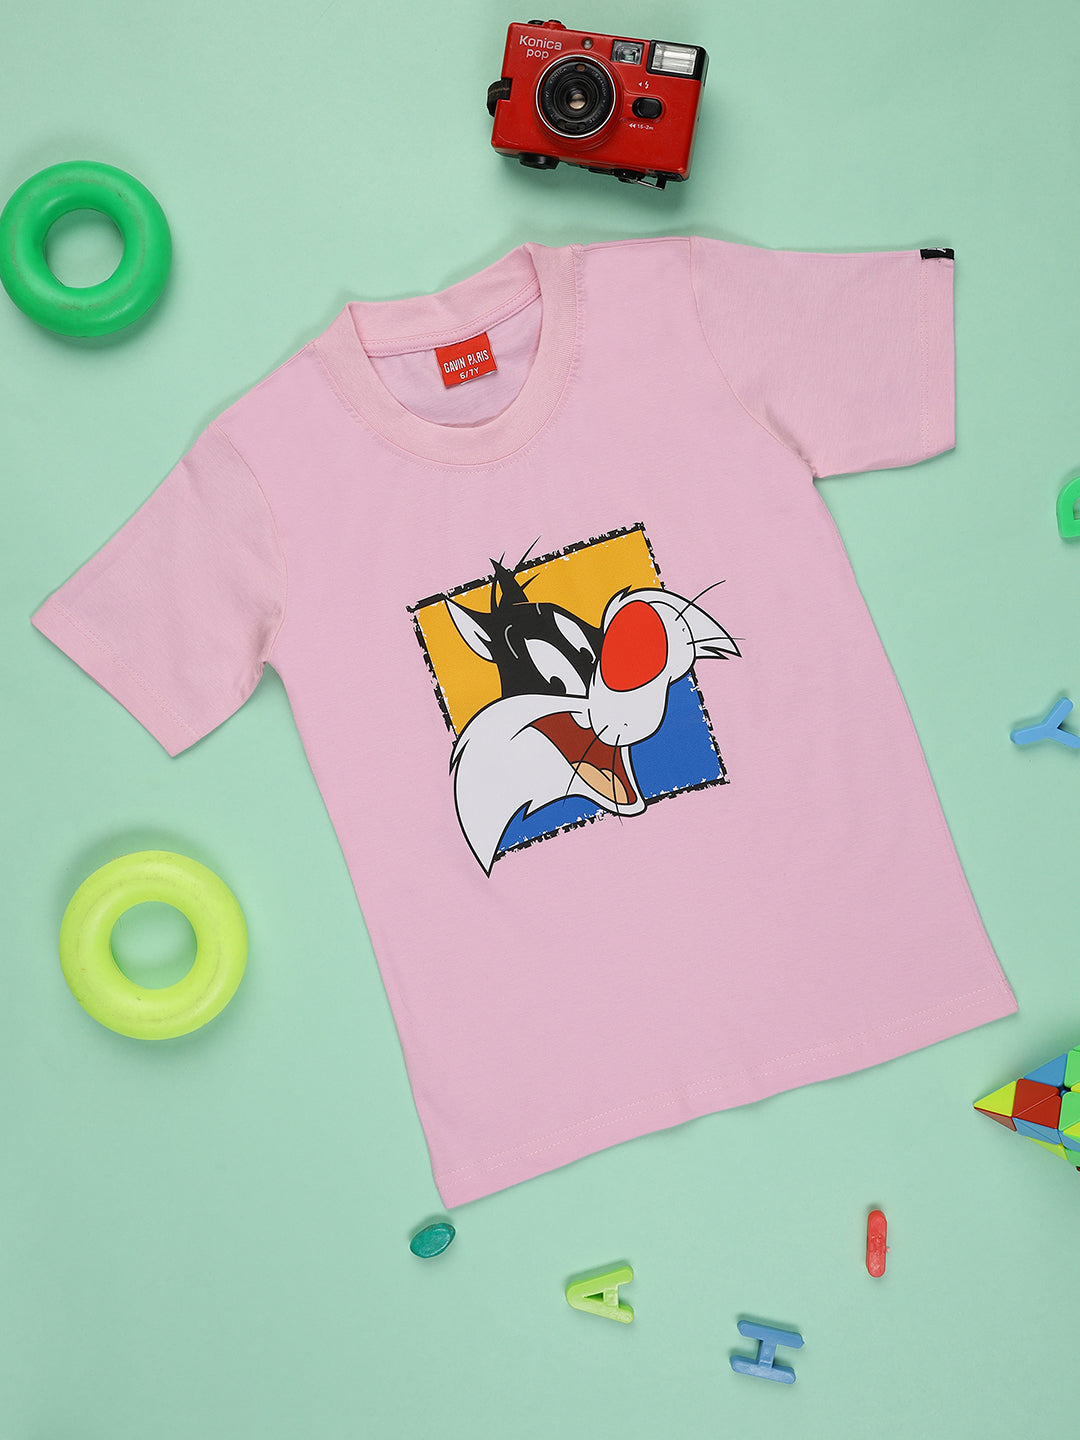 Sylvester T-shirts for Boys & Girls